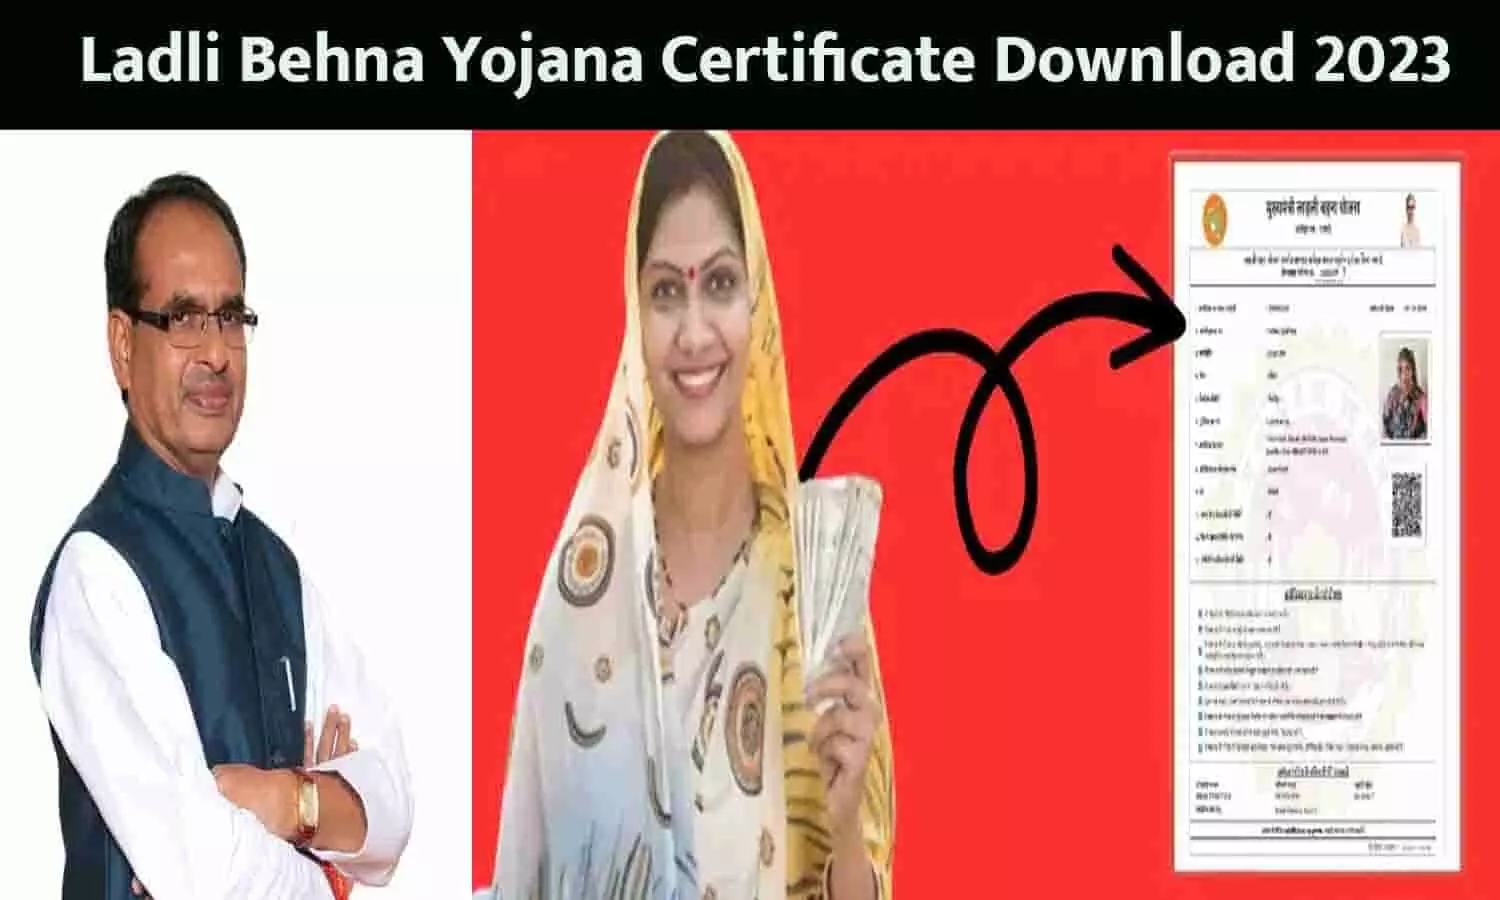 Ladli Behna Yojana Certificate Download Kaise Kare: लाडली बहना योजना सर्टिफिकेट डाउनलोड कैसे करे 2023